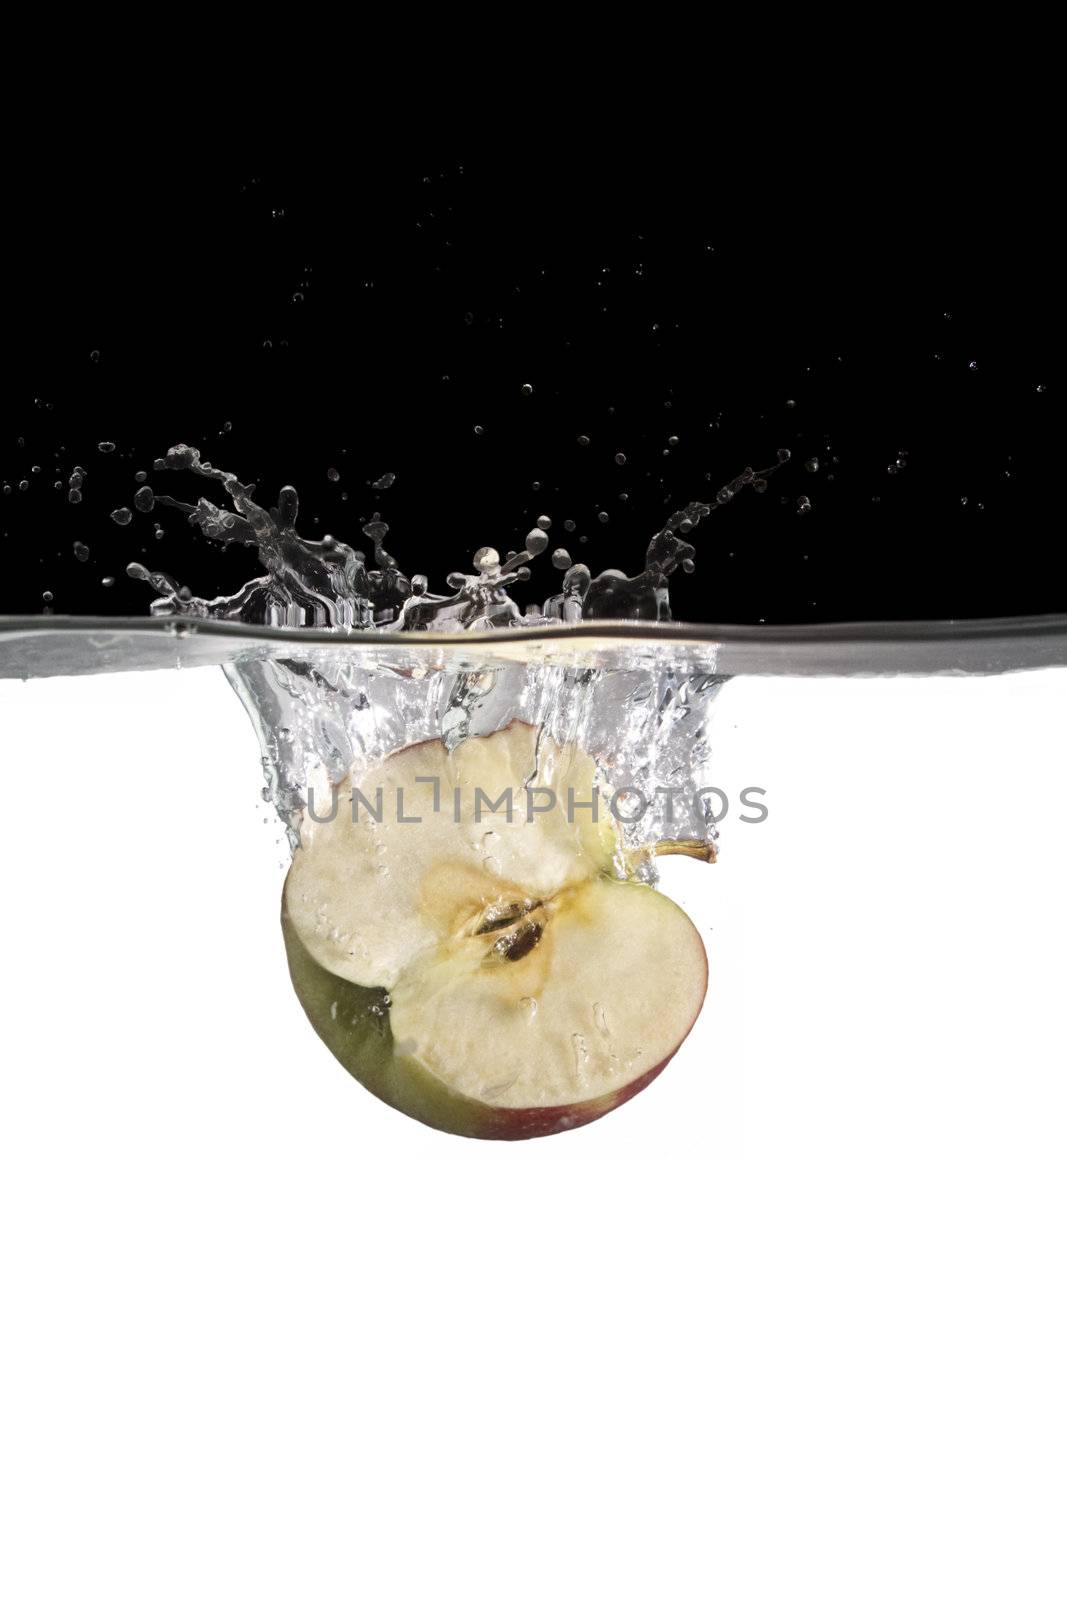 Apple slice in water by RobStark